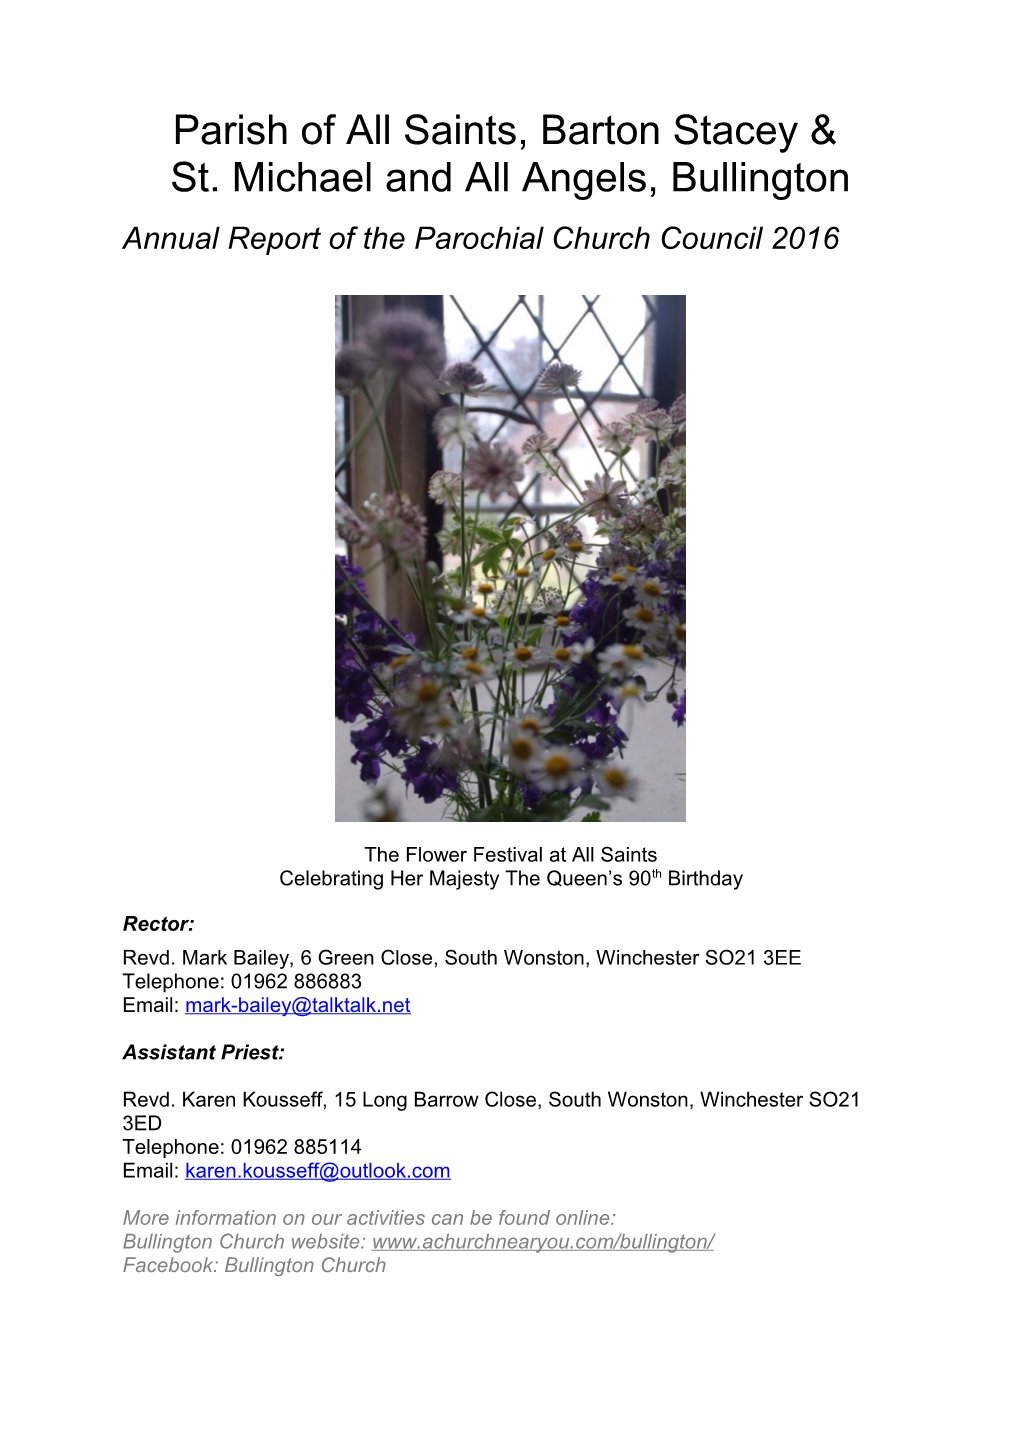 Parish of Barton Stacey and Bullington Annual Report 2015